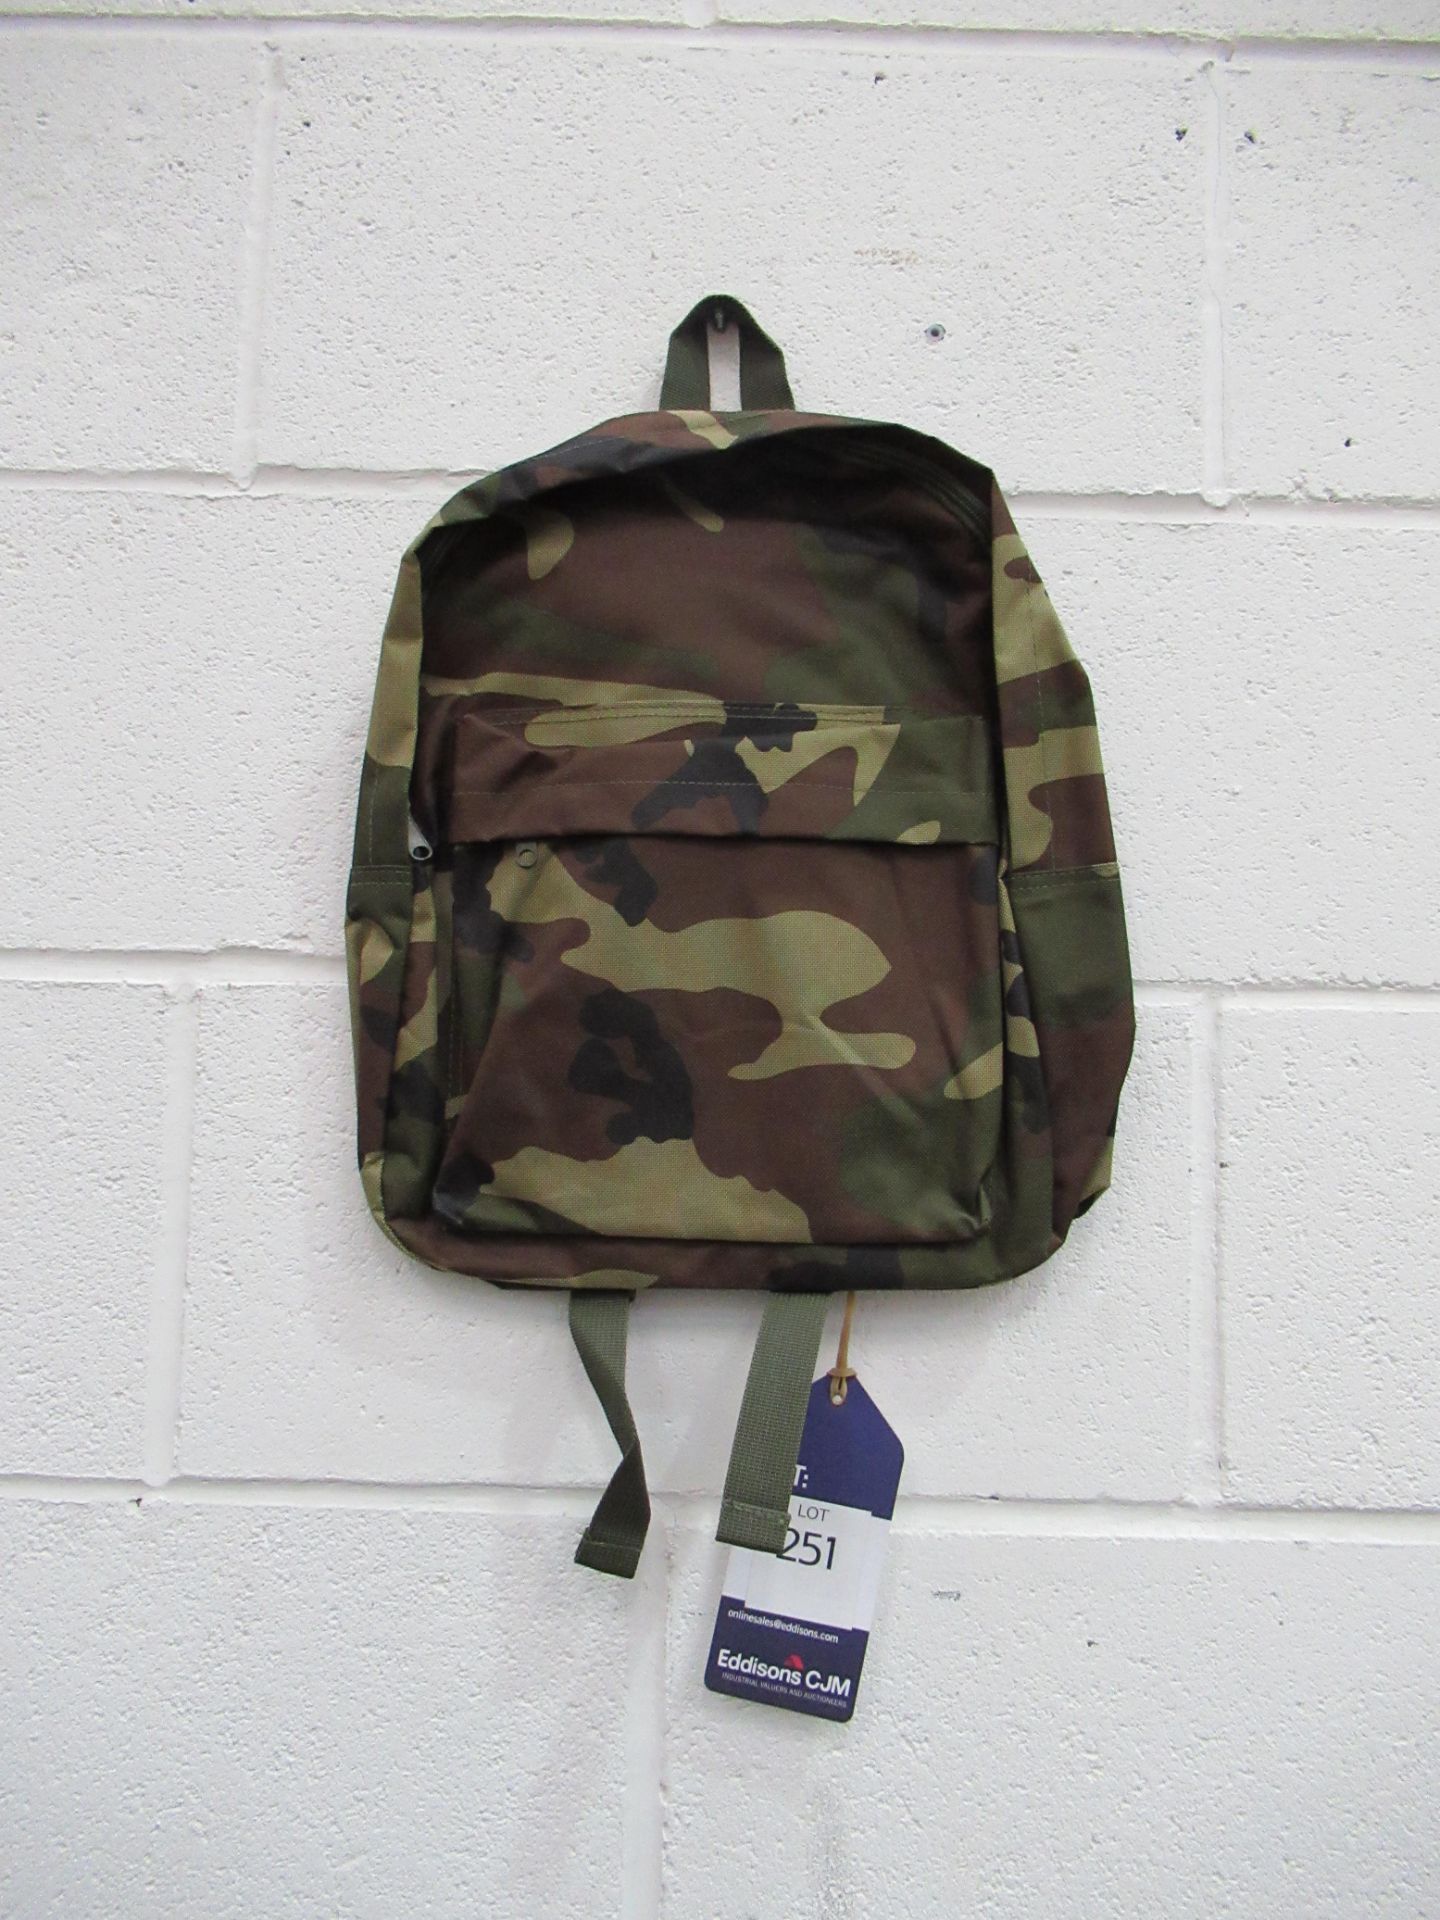 3x childrens backpacks including two Kombat BTP bags